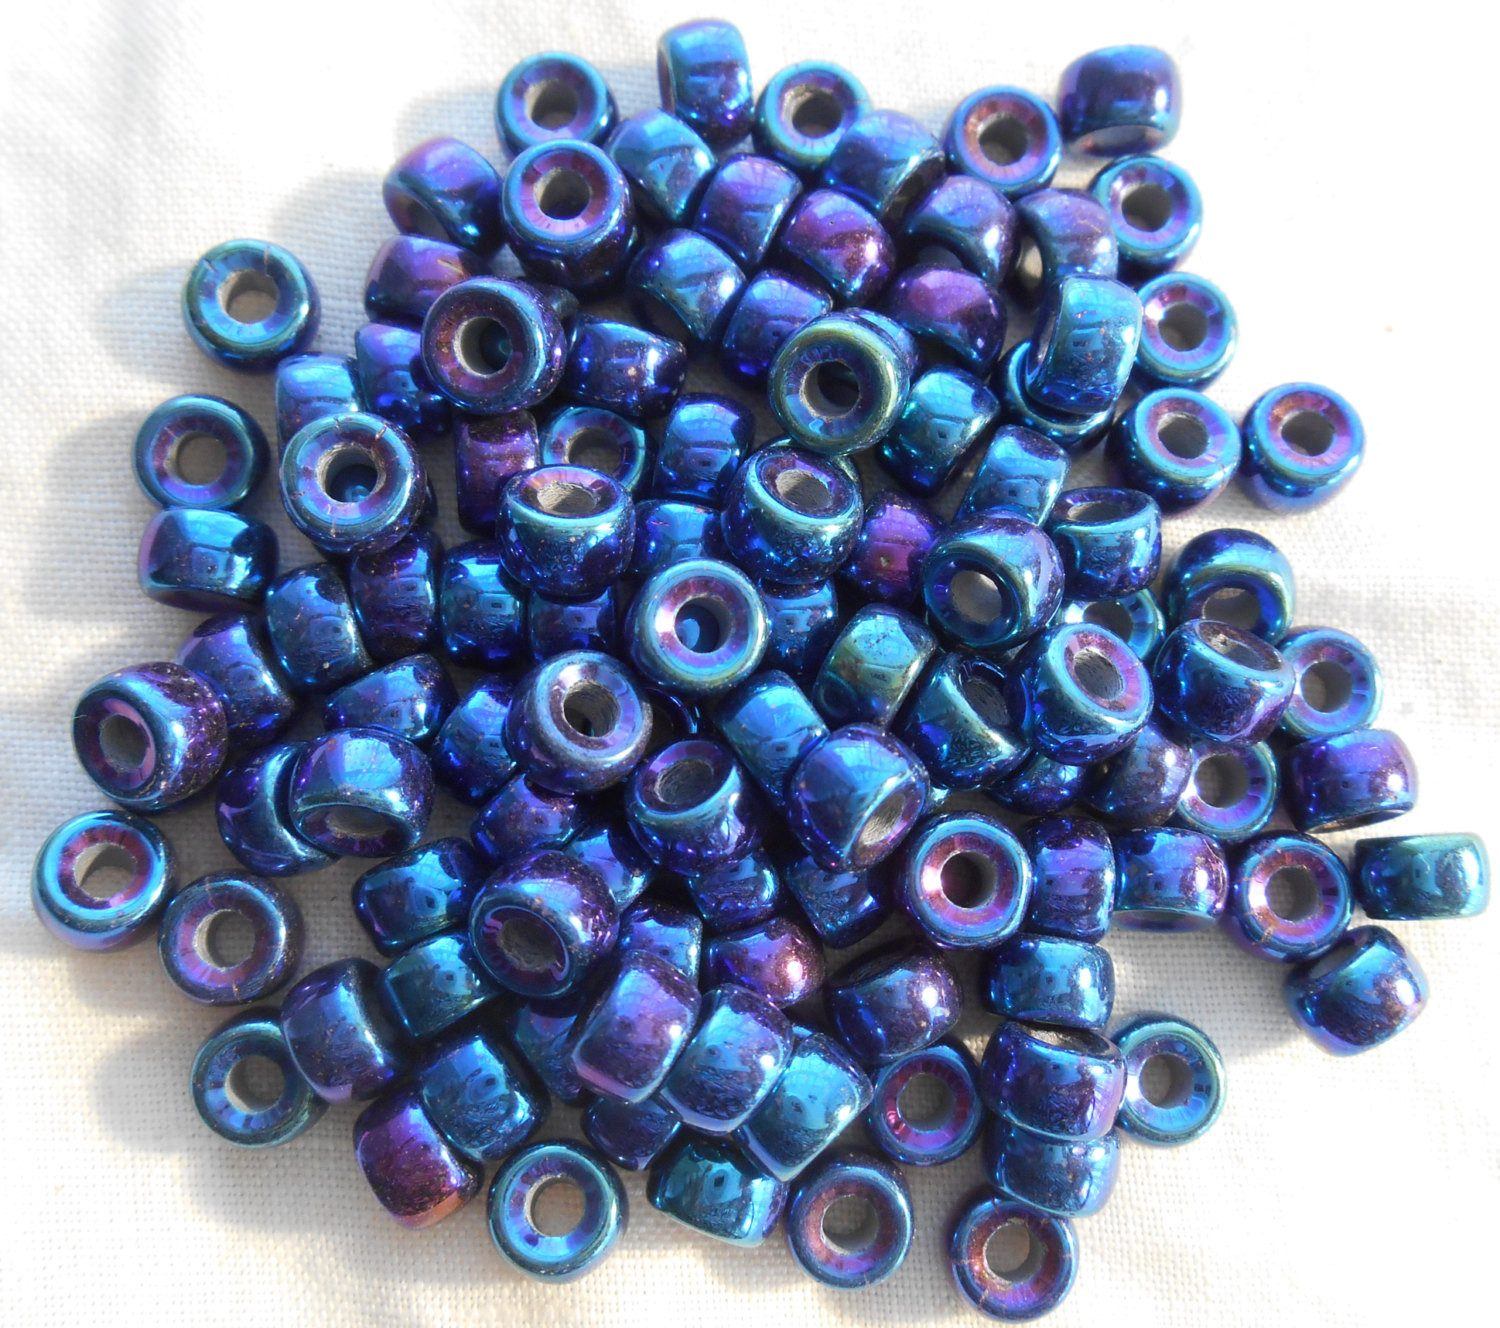 50 6mm Czech Blue Iris pony roller beads, large hole iridescent